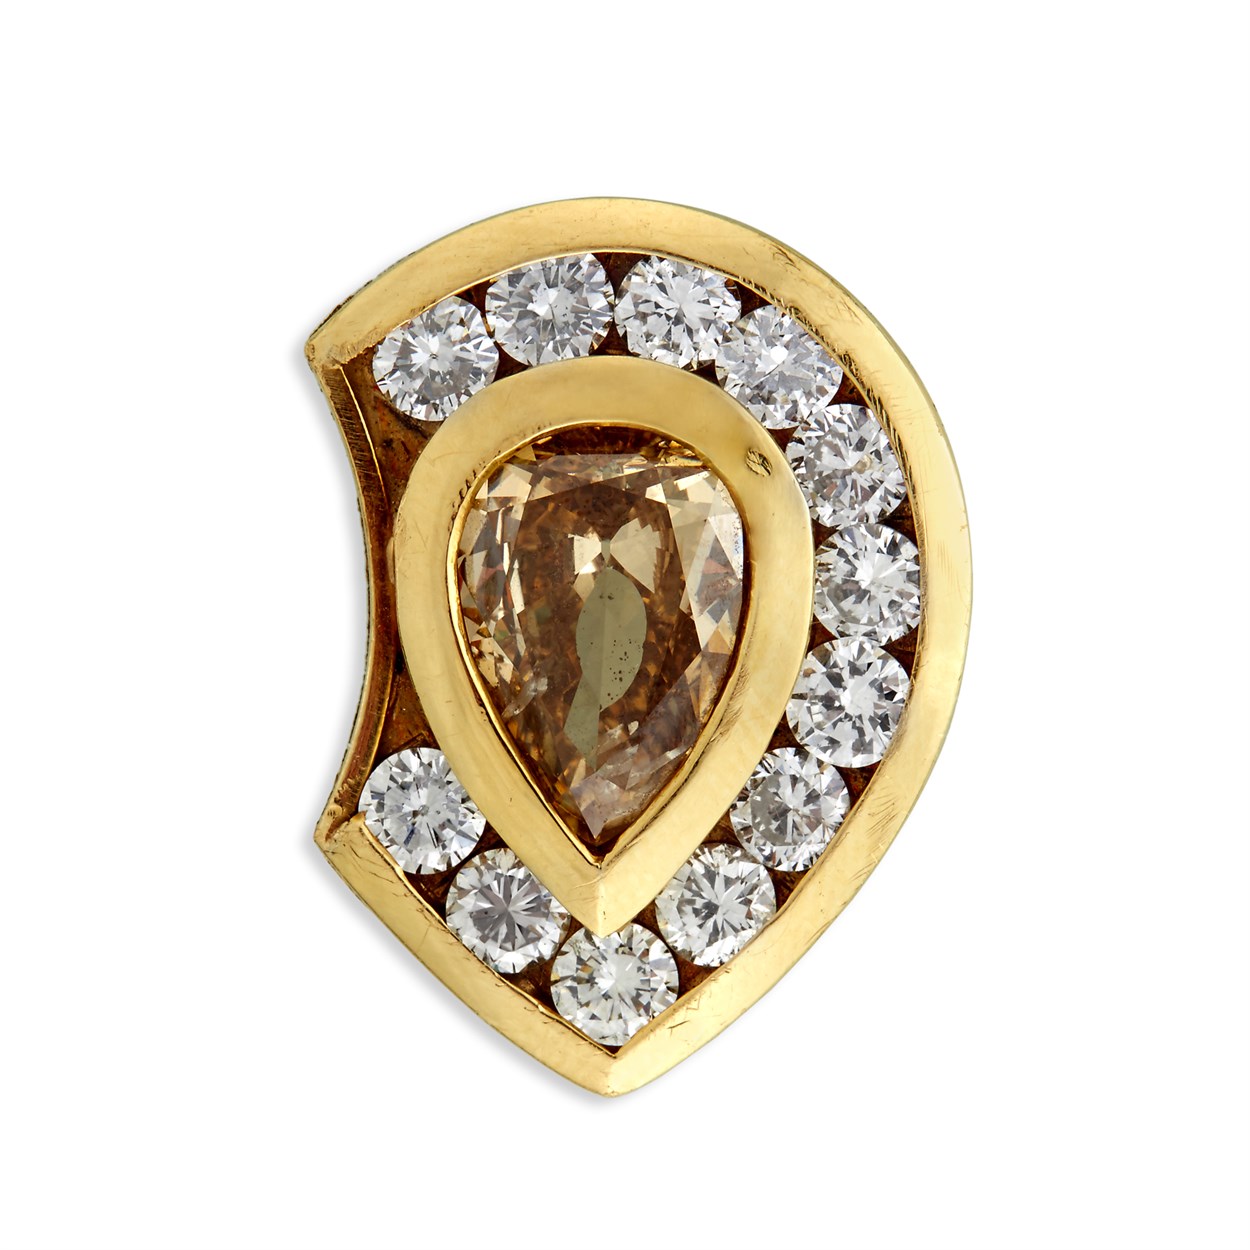 Lot 24 - A colored diamond, diamond, and fourteen karat gold applique